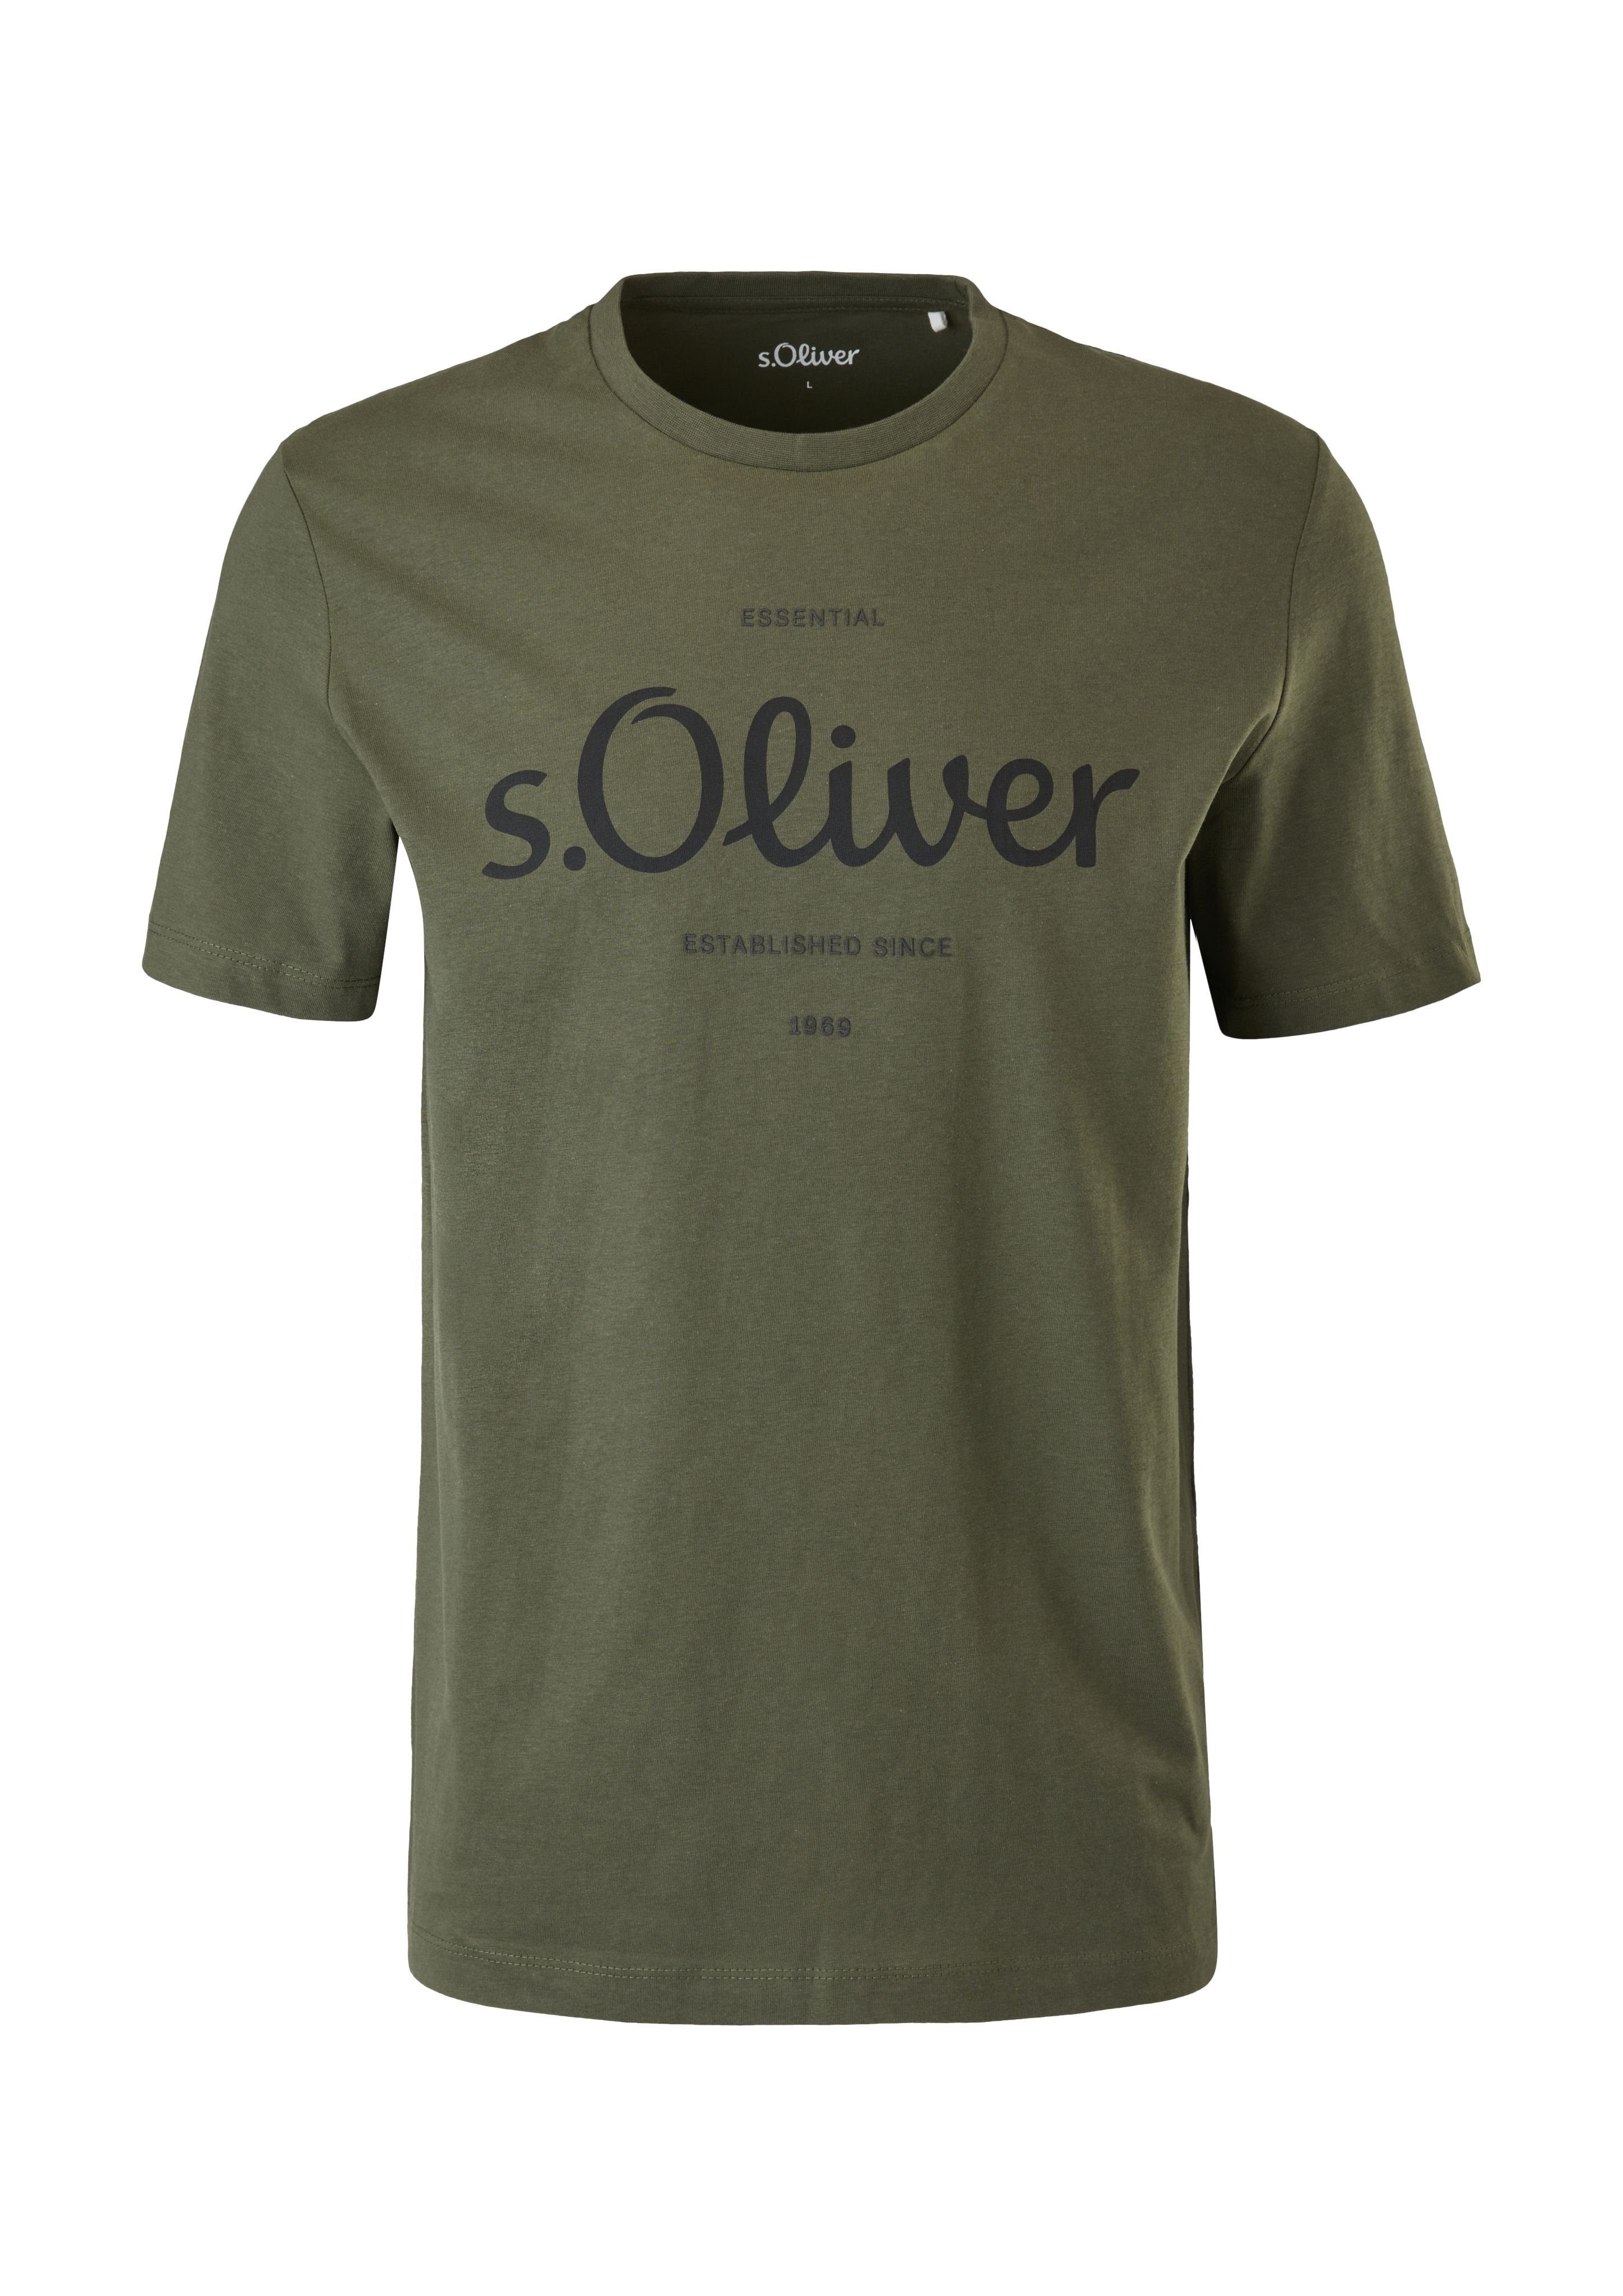 s.Oliver T-Shirt Grün